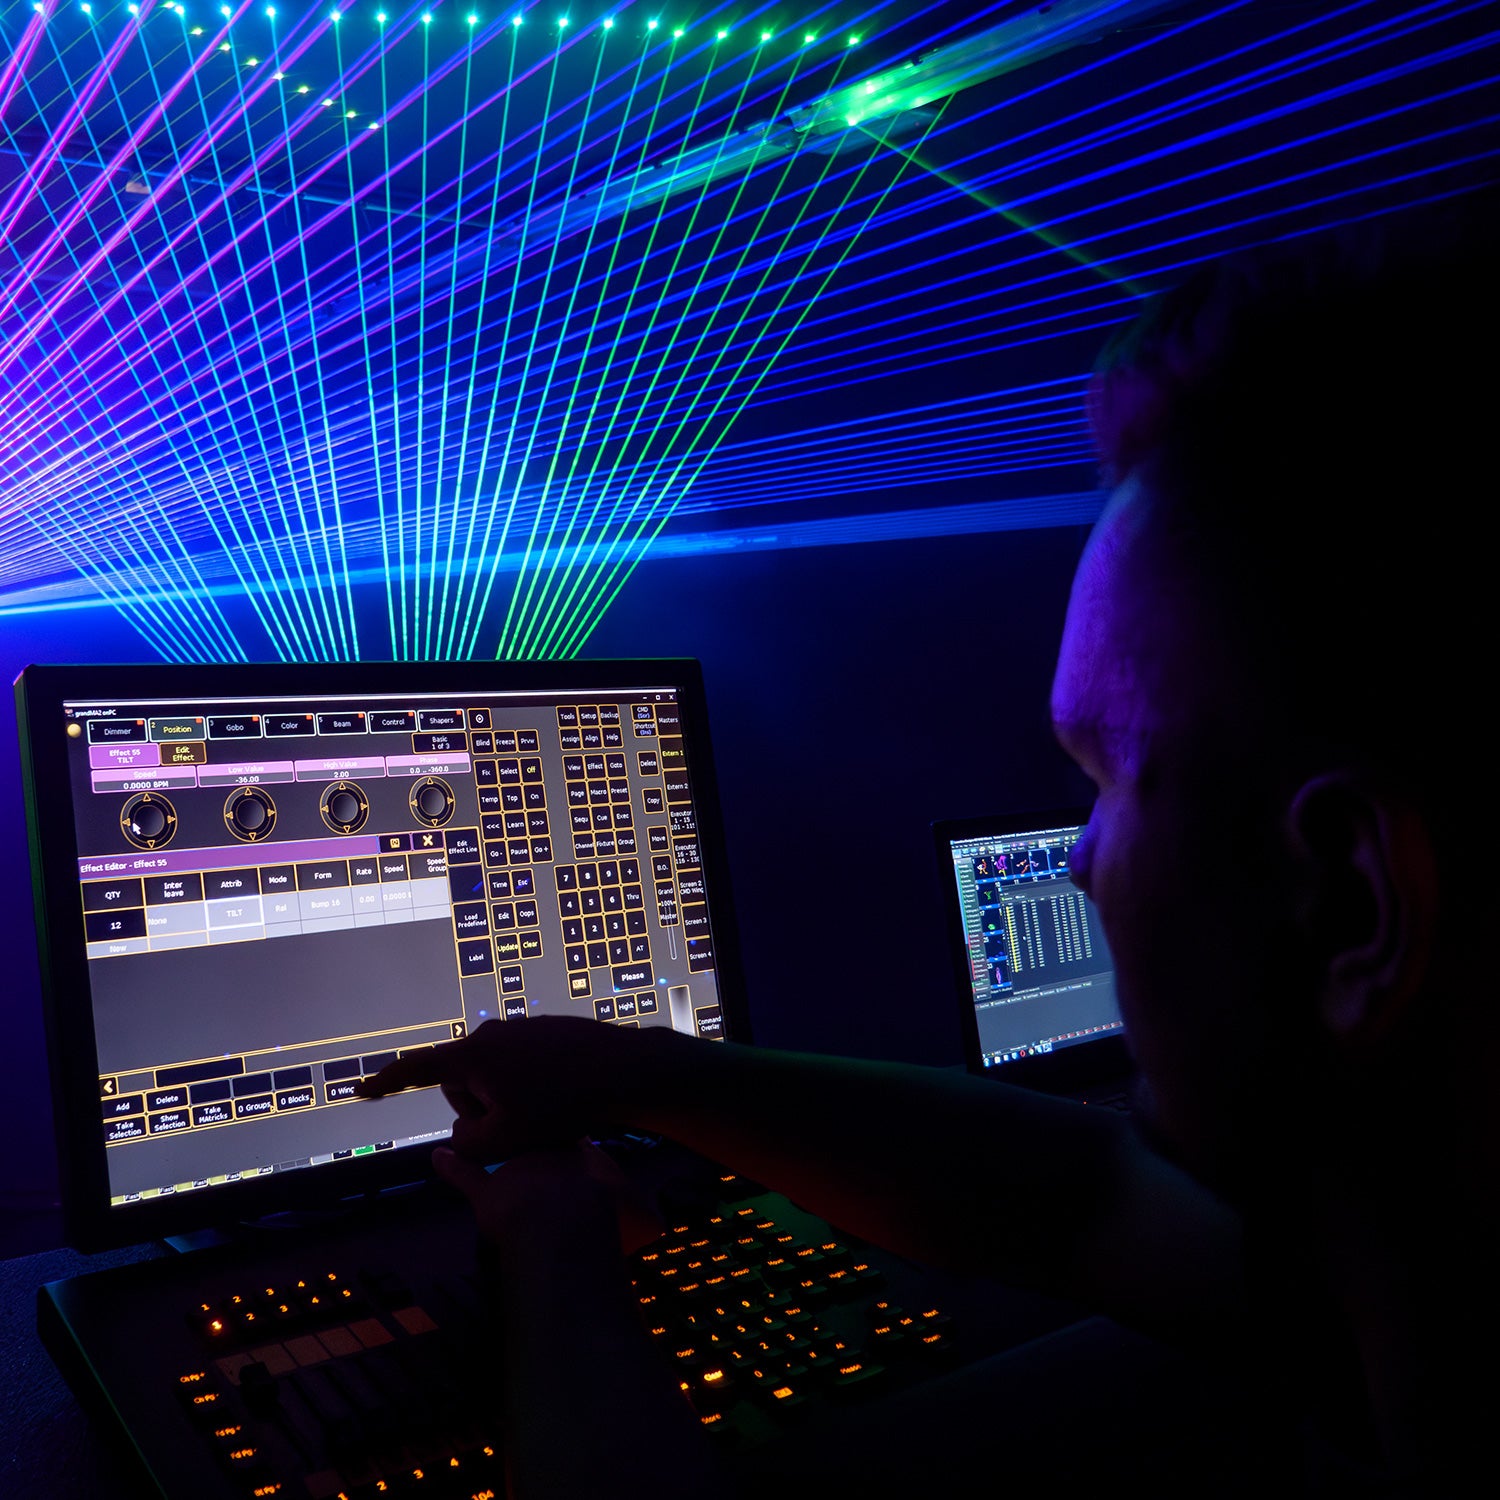 Laser show control via DMX and ArtNet